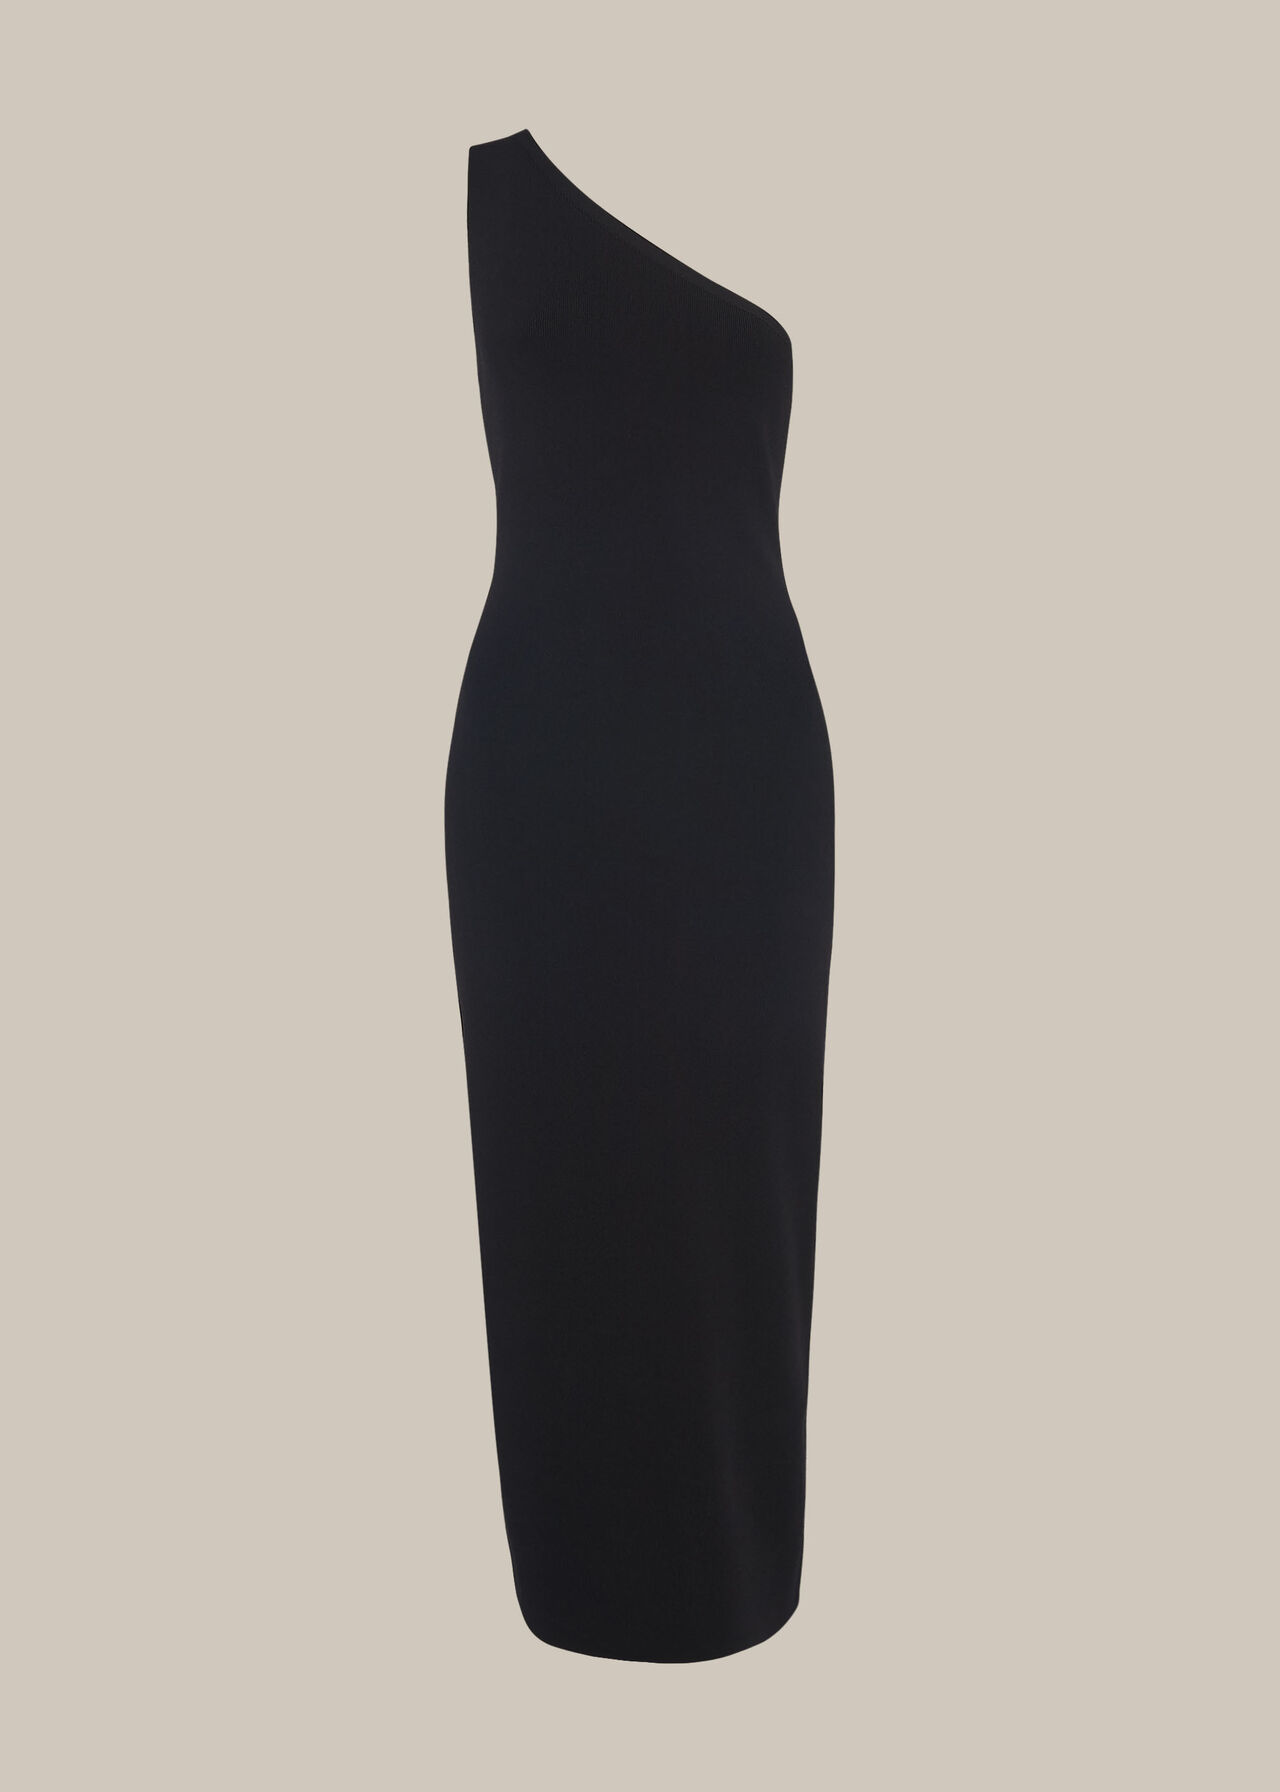 Black One Shoulder Midi Knit Dress | WHISTLES